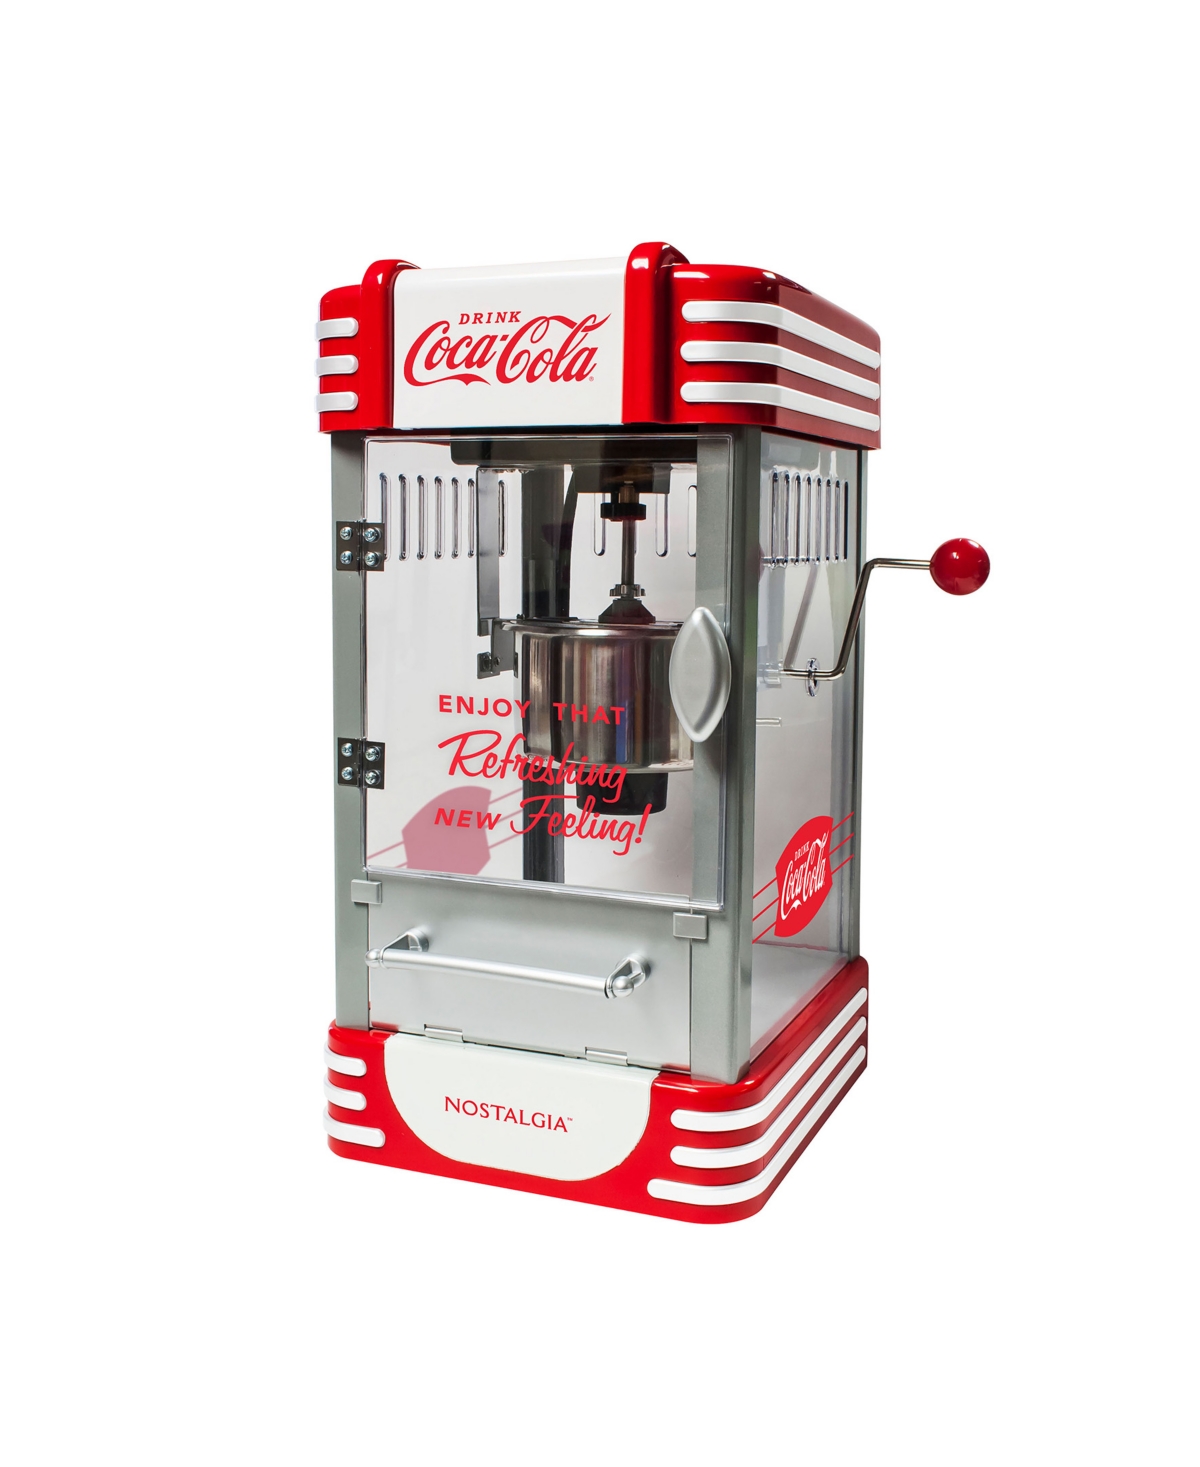 Coca-cola Nostalgia 2.5 oz Kettle Popcorn Maker In Red